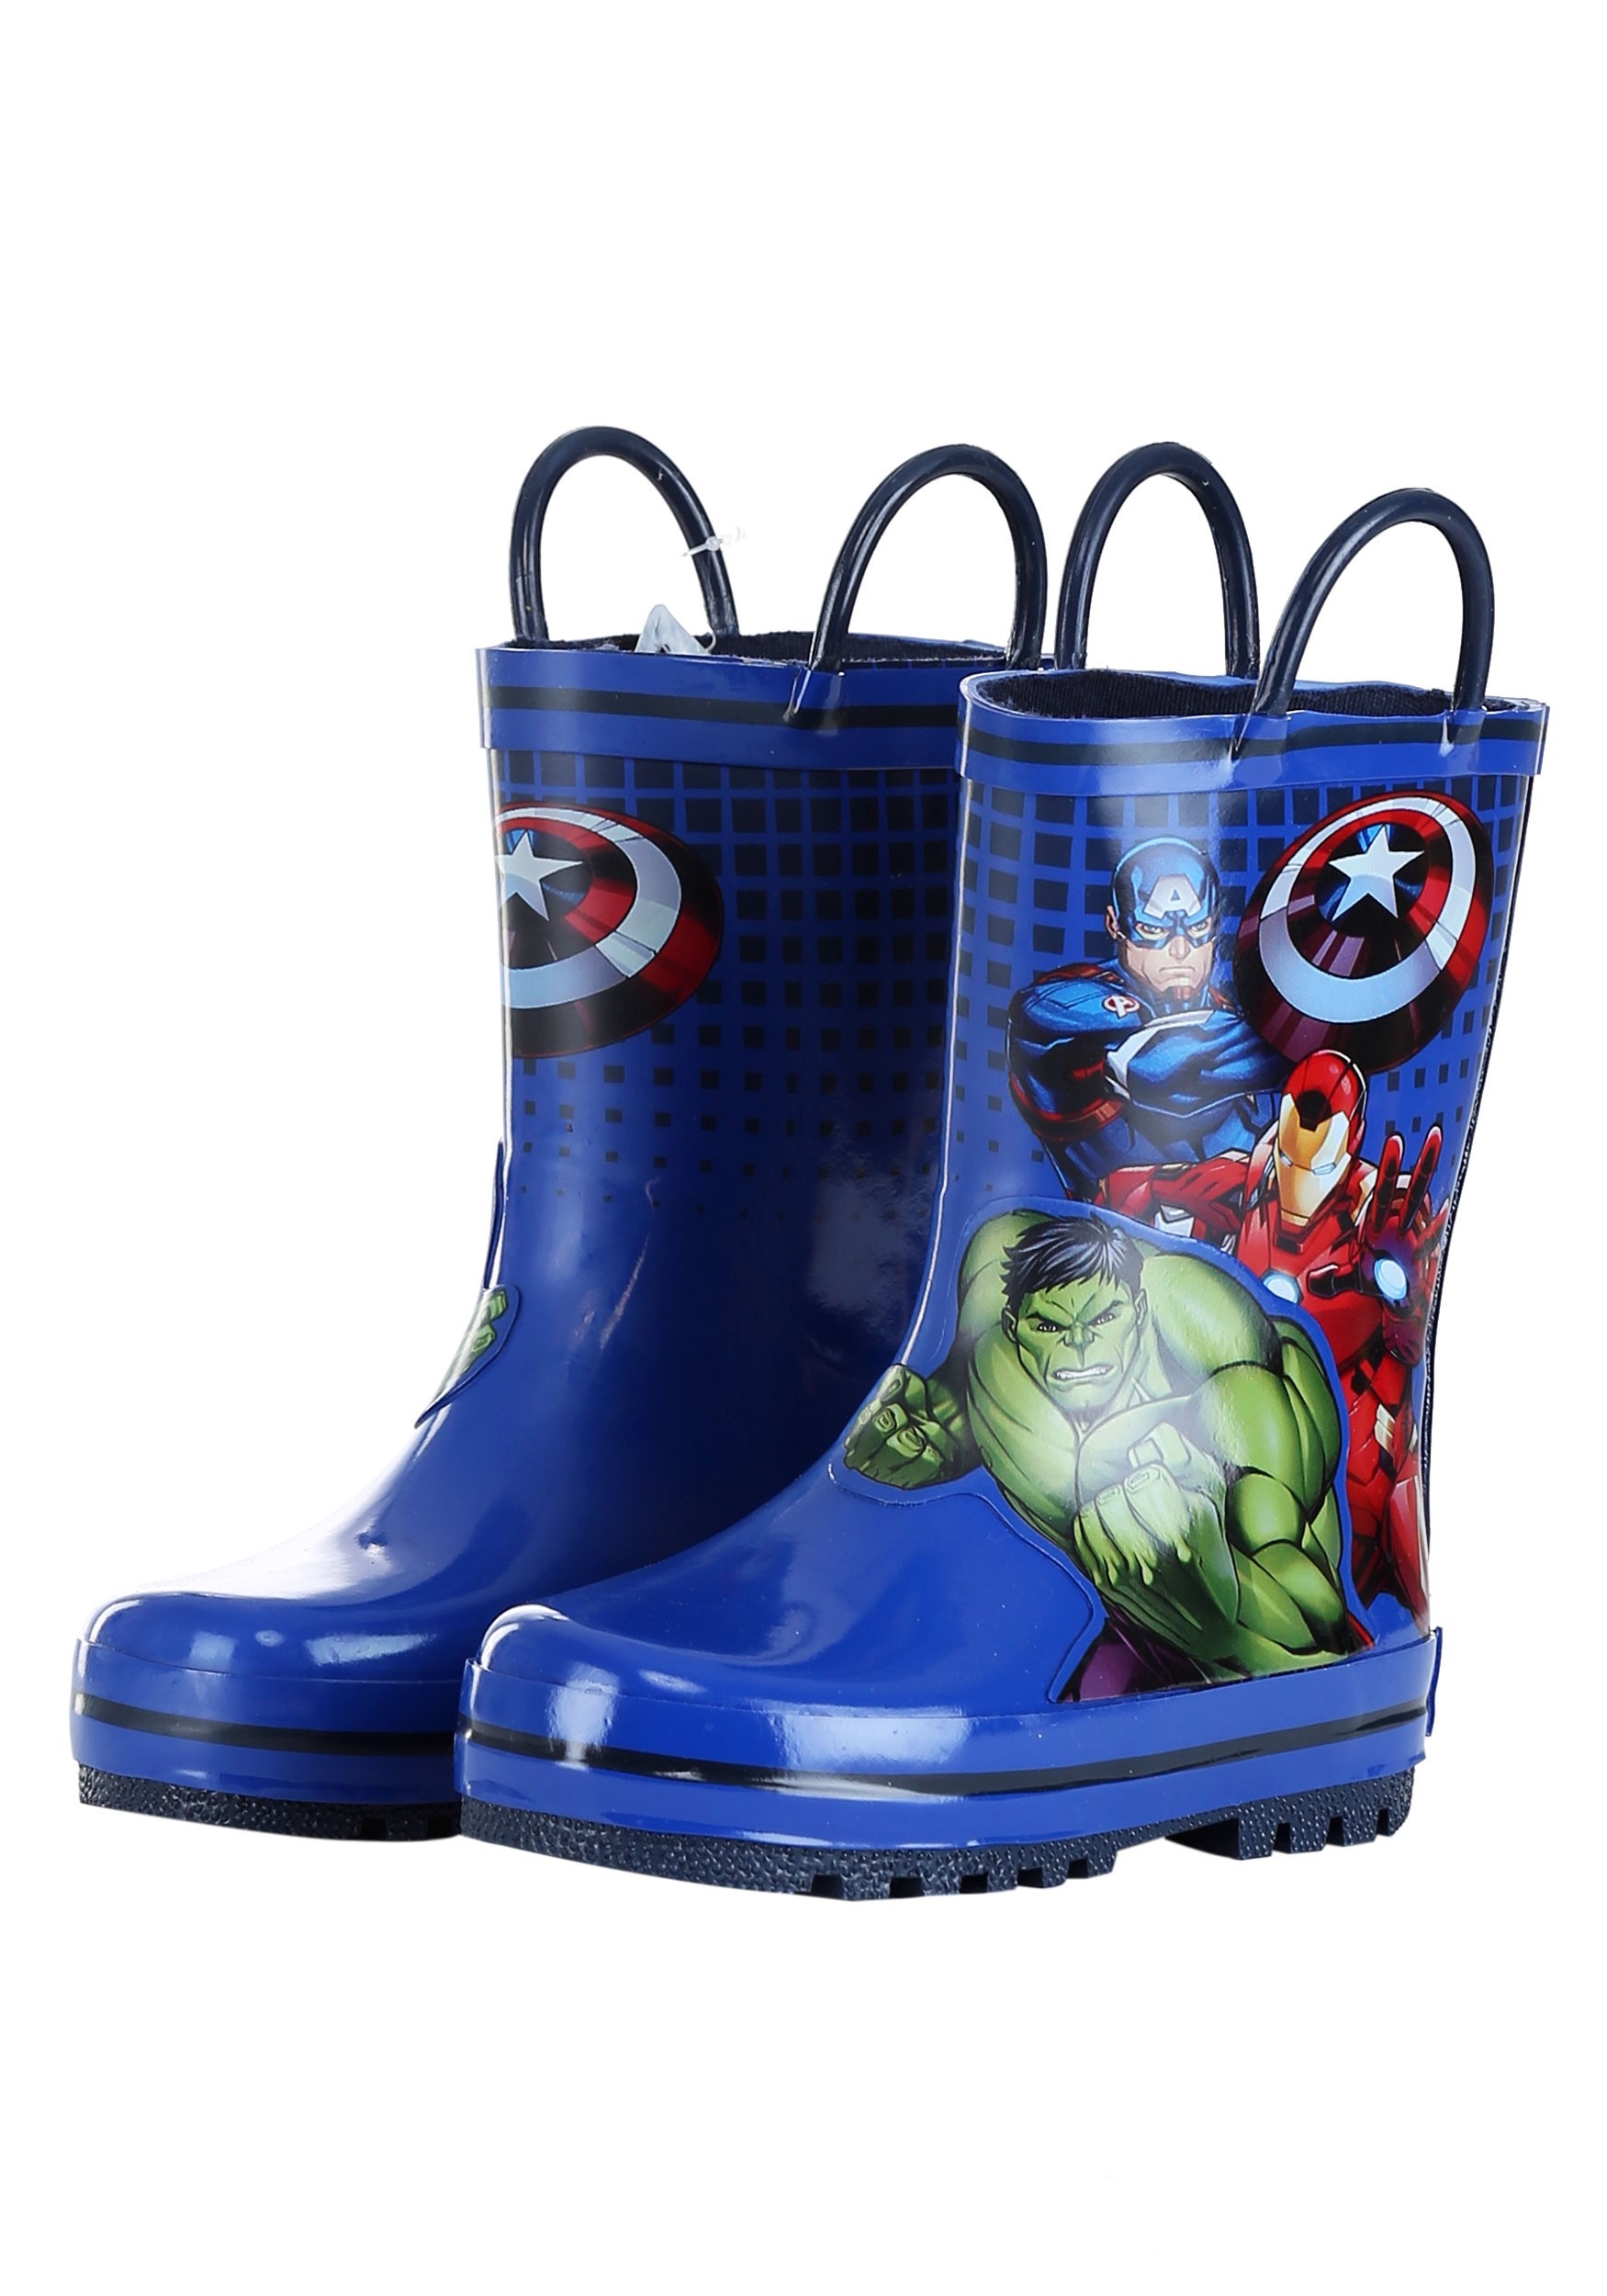 Avengers Child Rain Boot